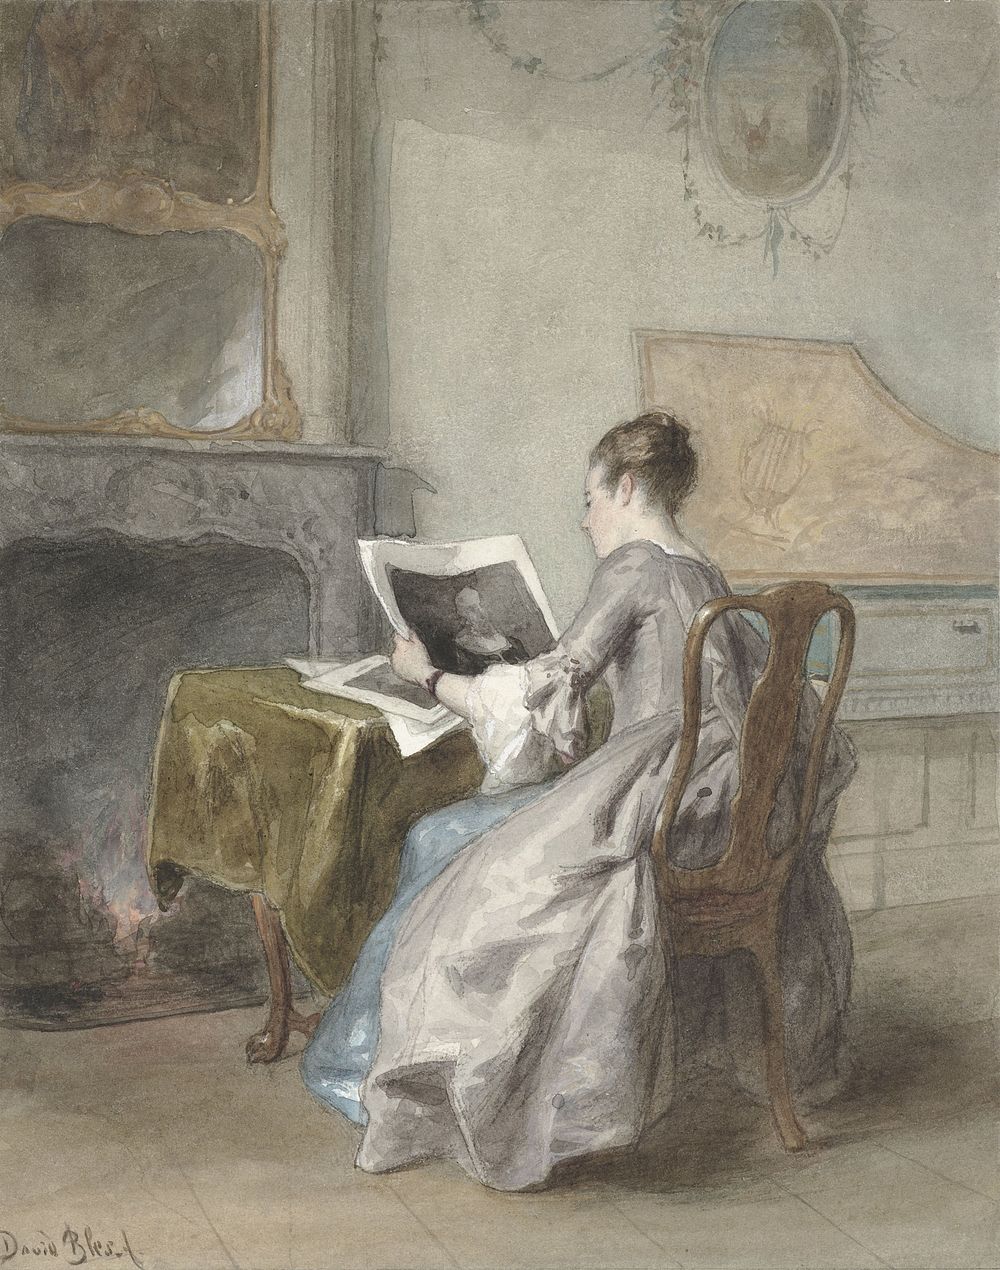 Kunstbeschouwster (1831 - 1892) by David Bles